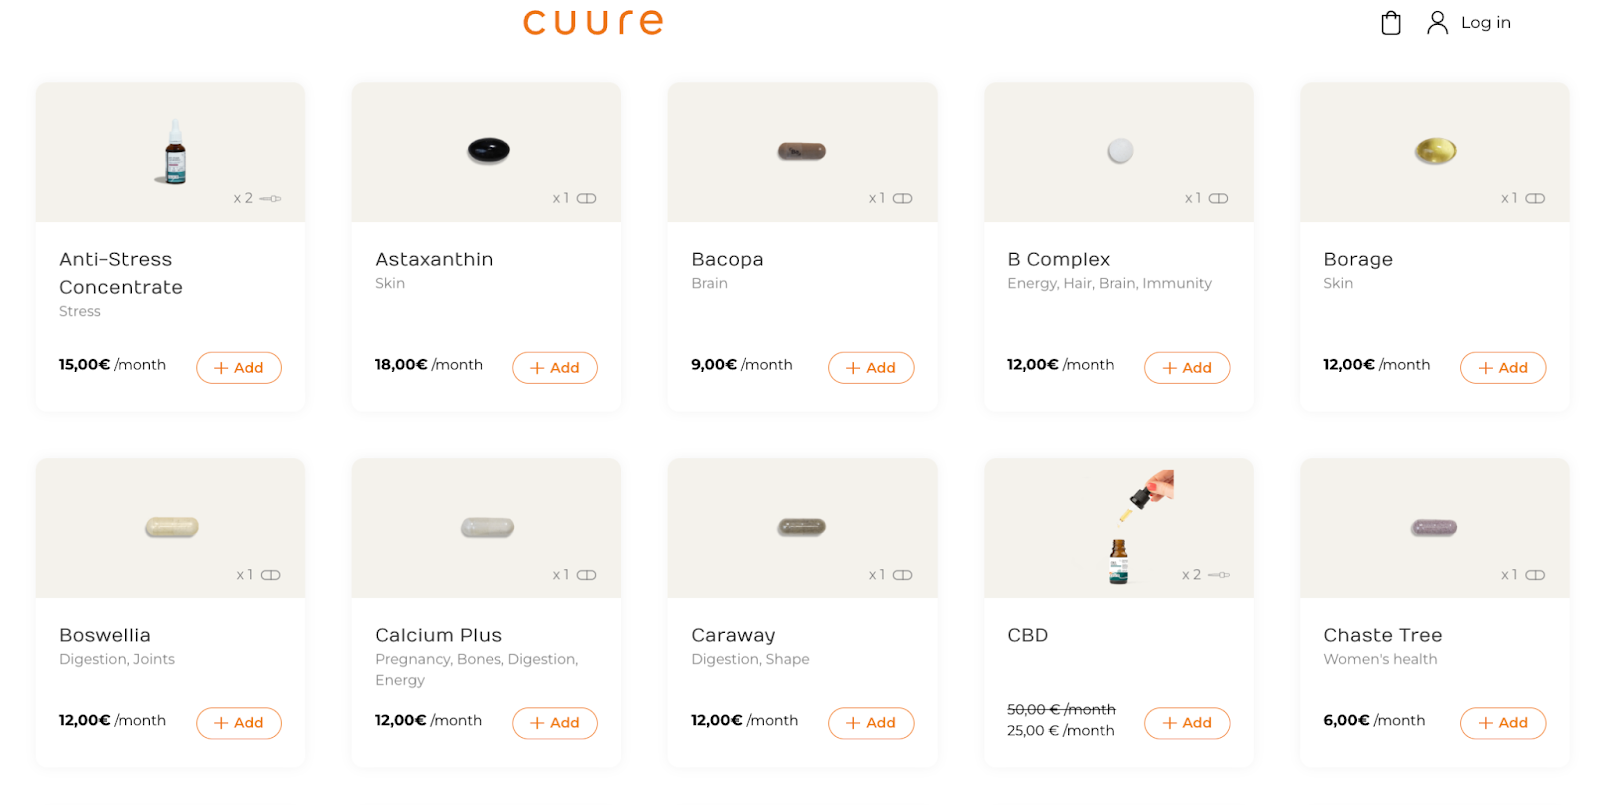 A screenshot of Cuure's supplement marketplace